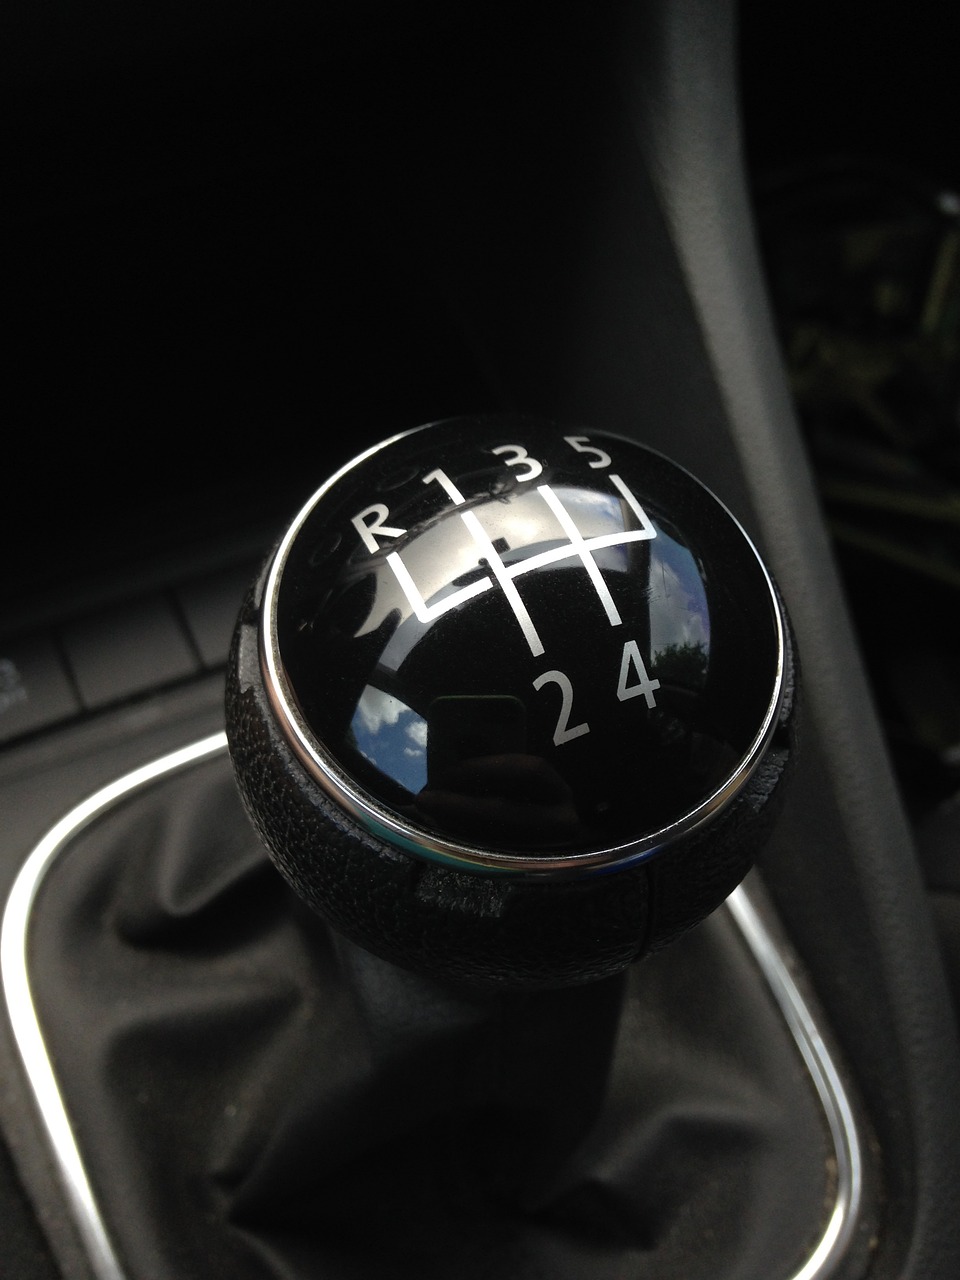 gear shift knob for manual transmission